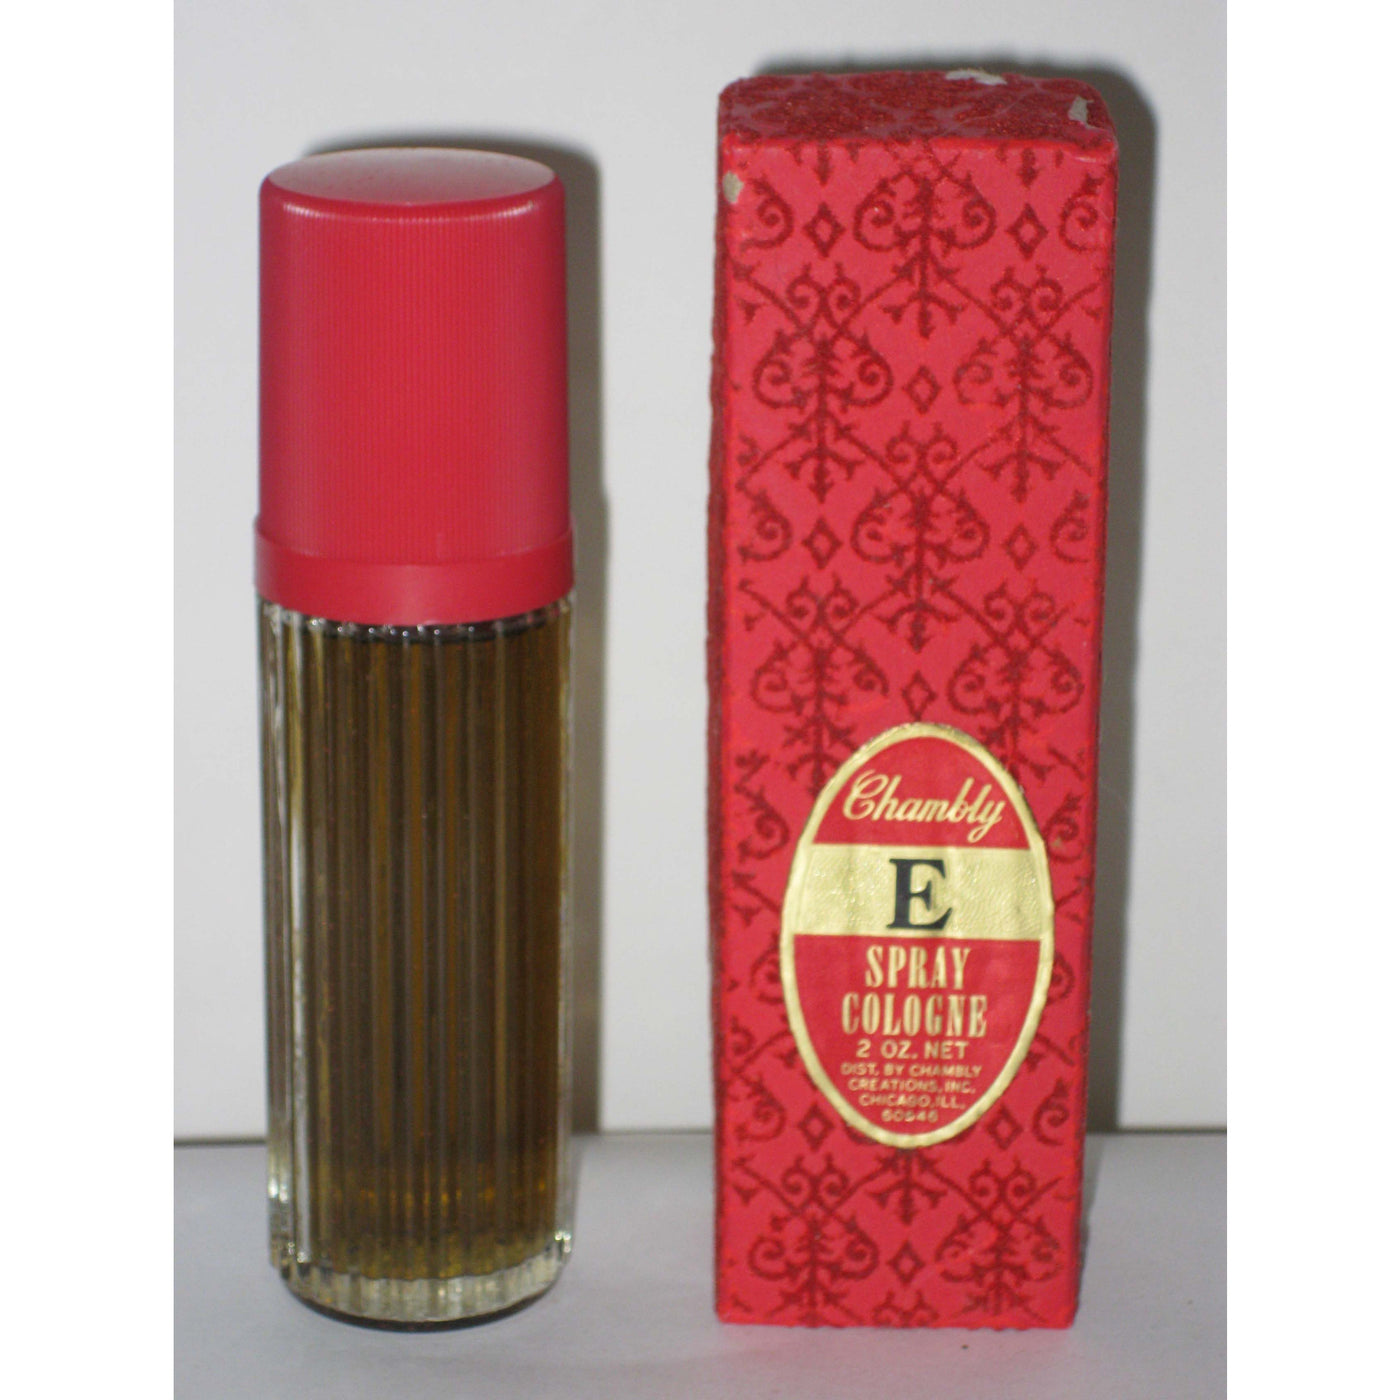 Vintage Chambly E Spray Cologne By Chambly